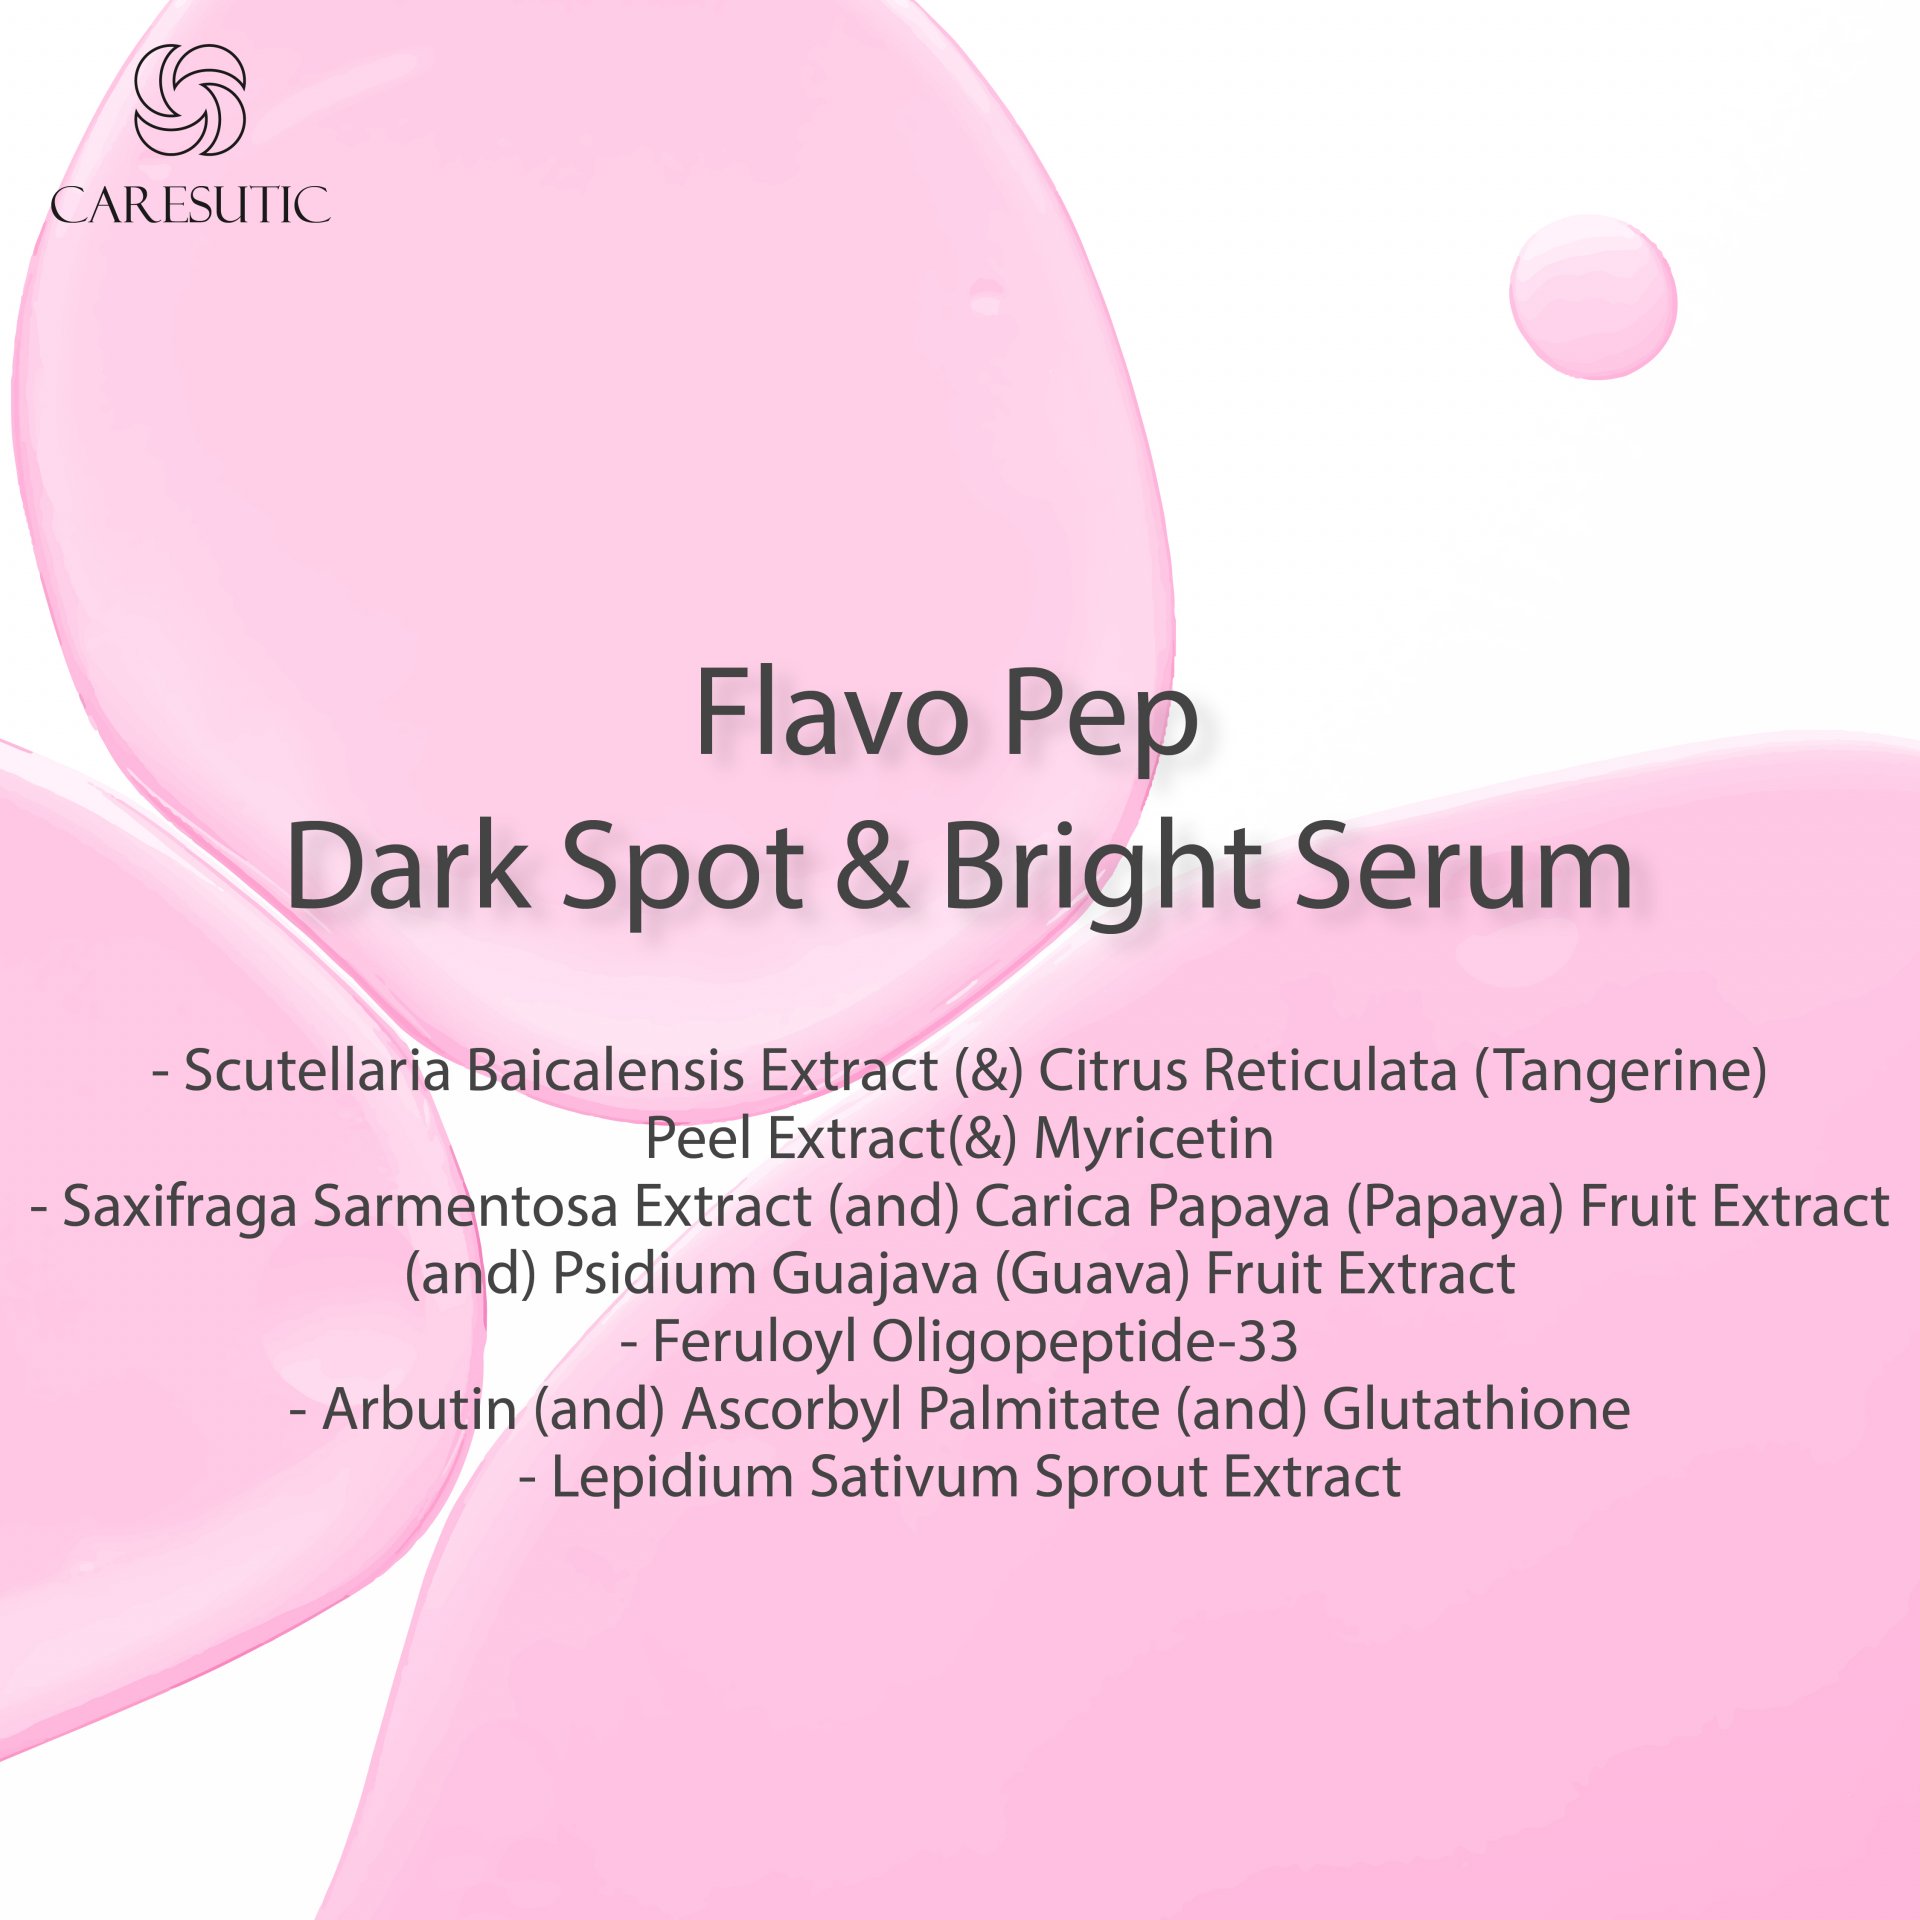 Flavo Pep Dark Spot & Bright Serum